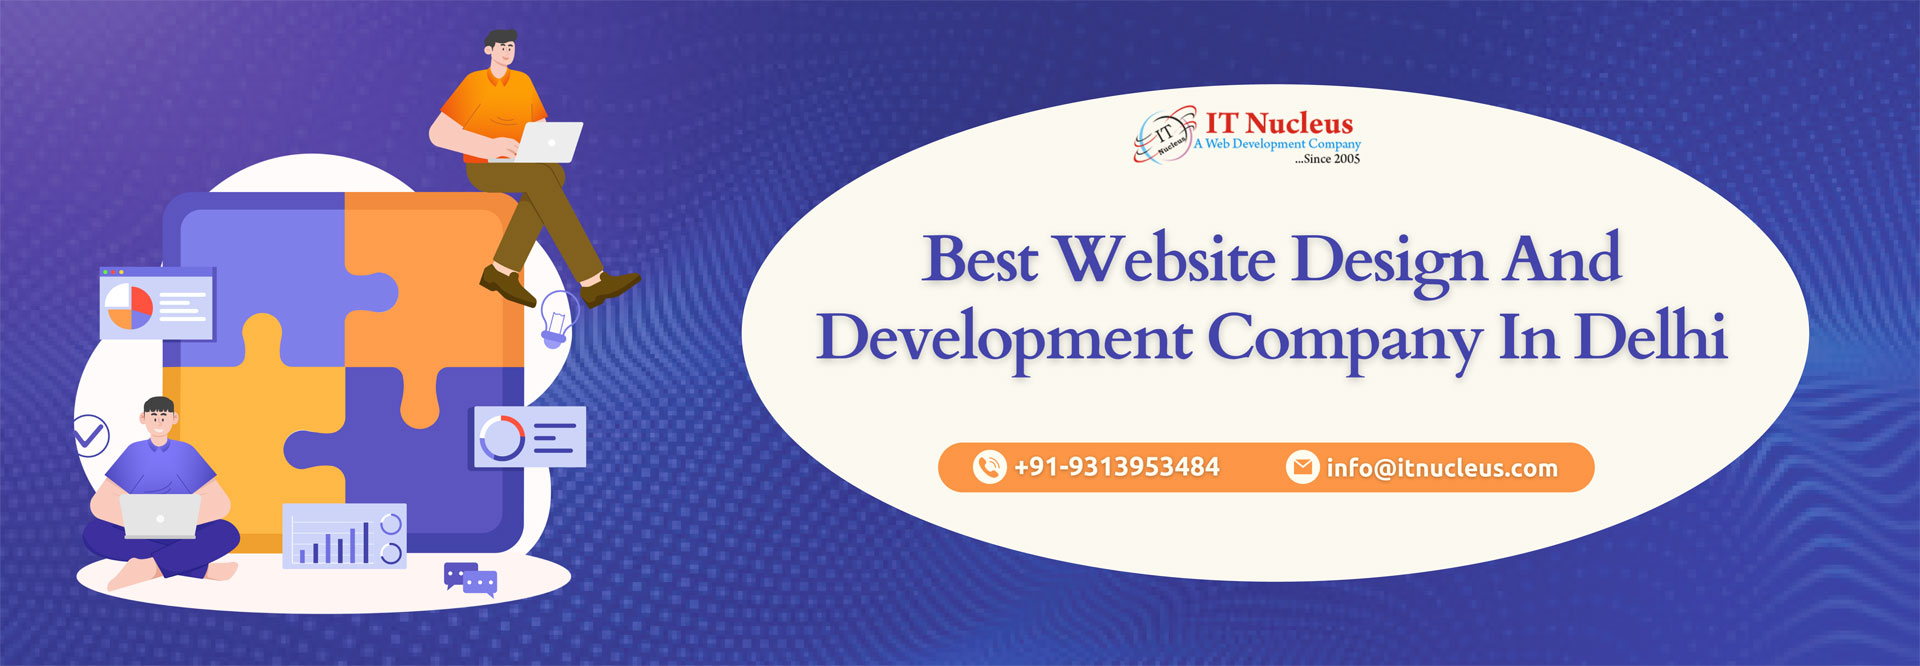 Best Website Design And Development Company In Delhi